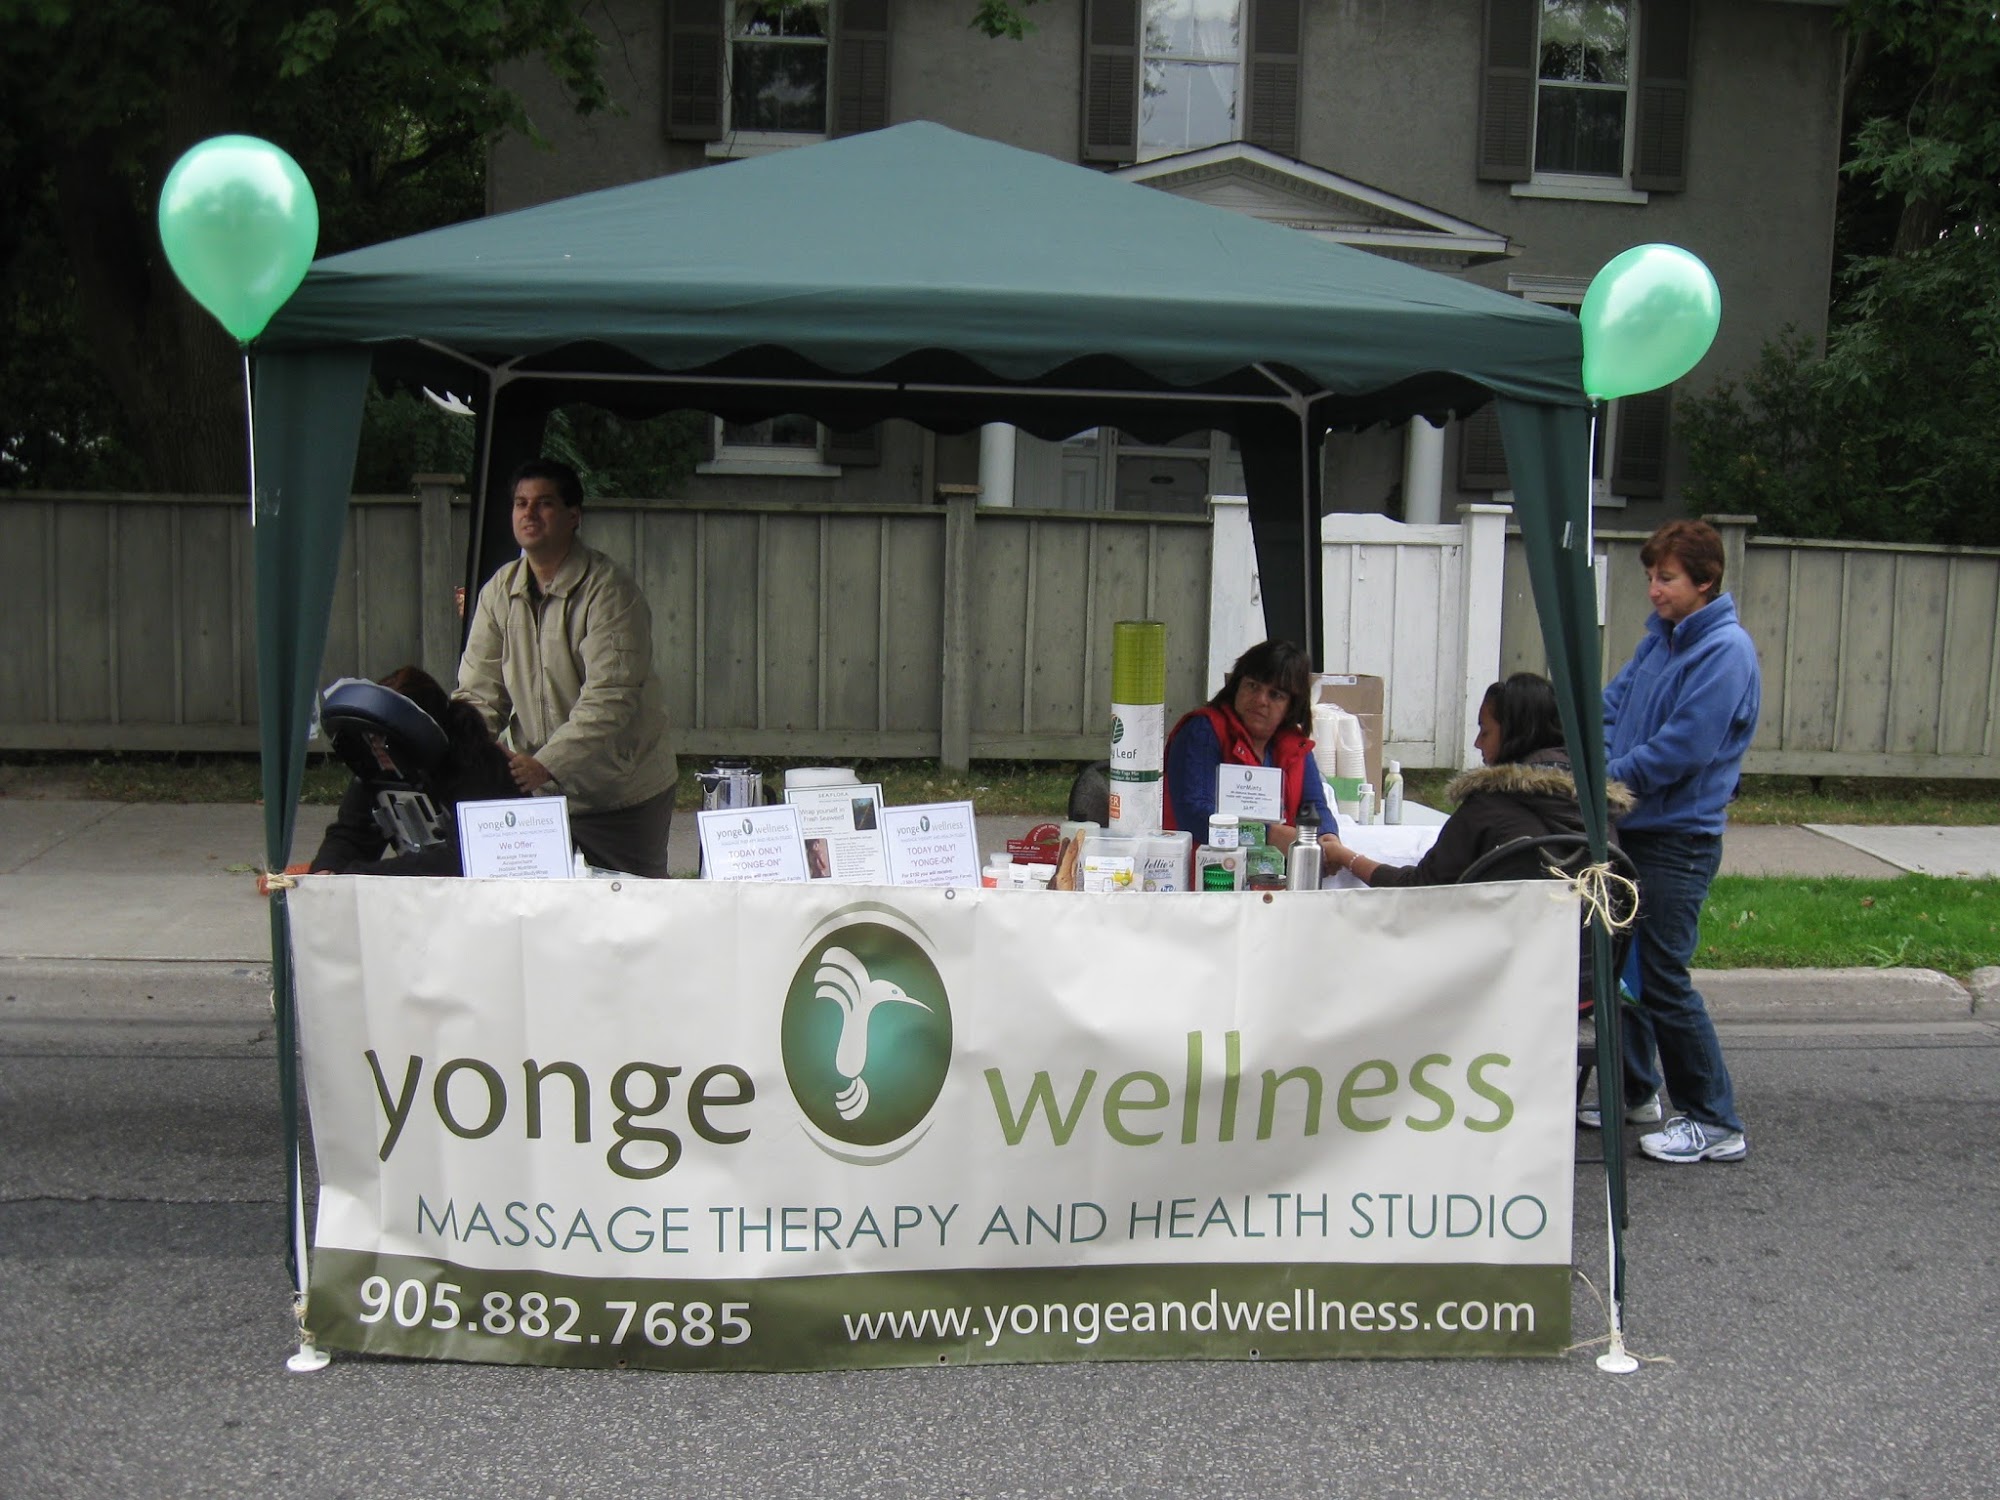 Yonge & Wellness - Massage Therapy and Health Studio